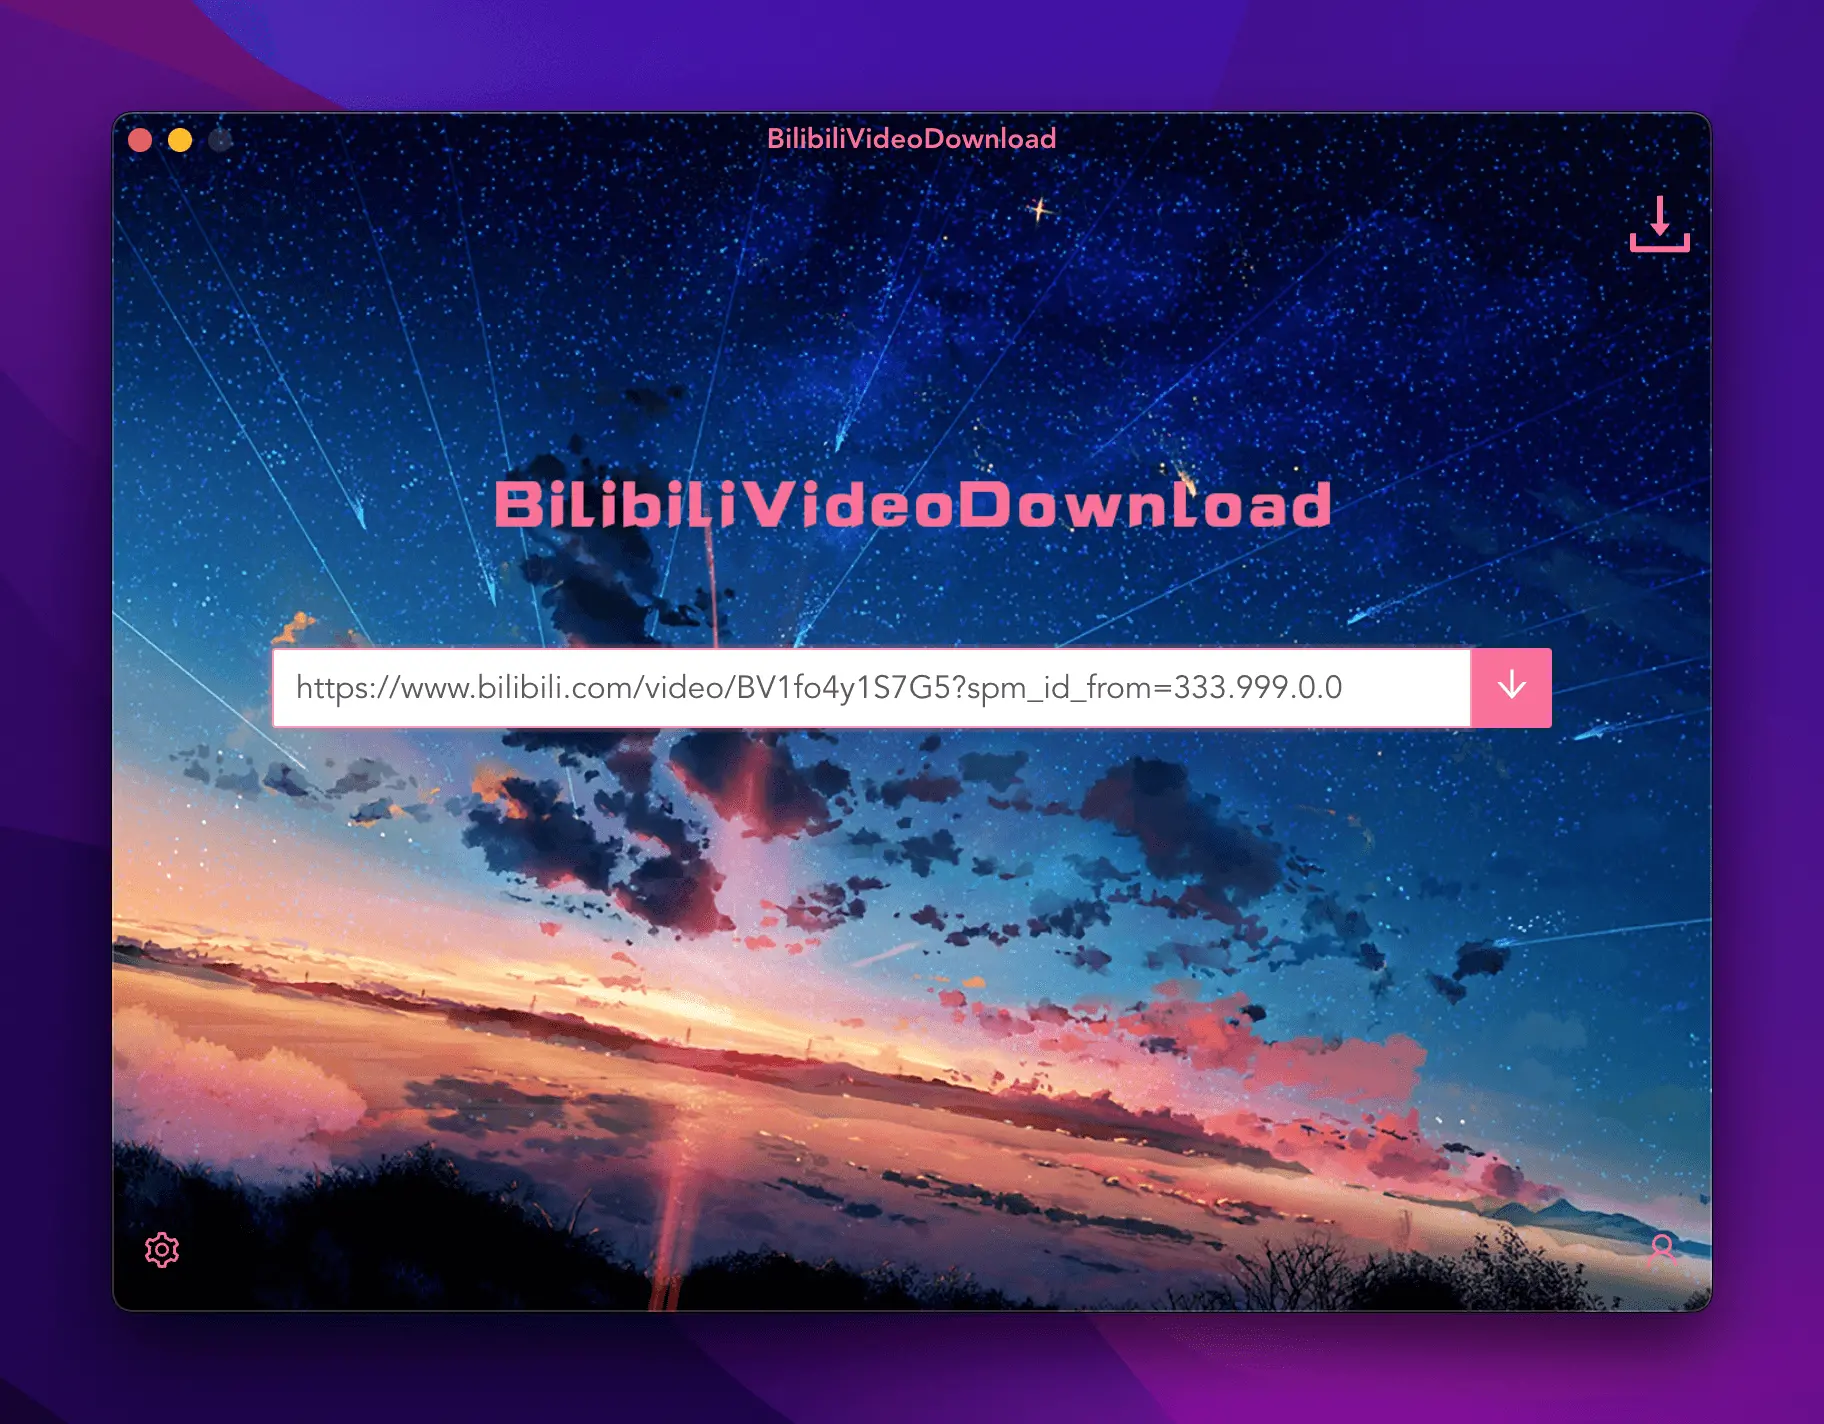 BilibiliVideoDownload: 免费开源的B站视频下载客户端